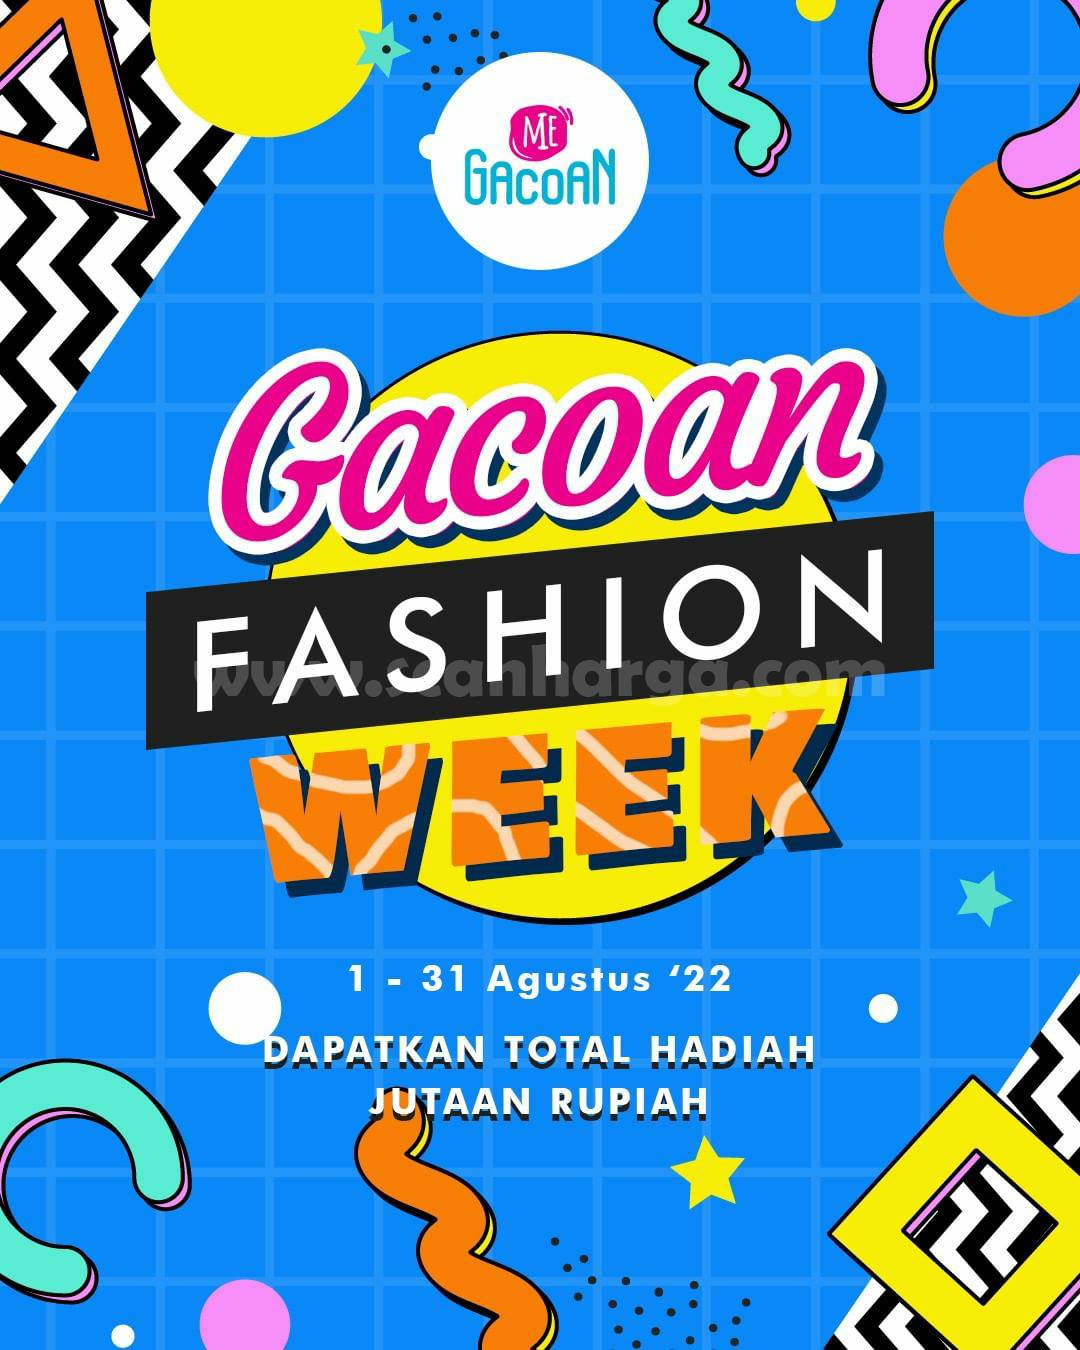 Mie Gacoan Present GACOAN FASHION WEEK! Berhadiah Juta-an Rupiah